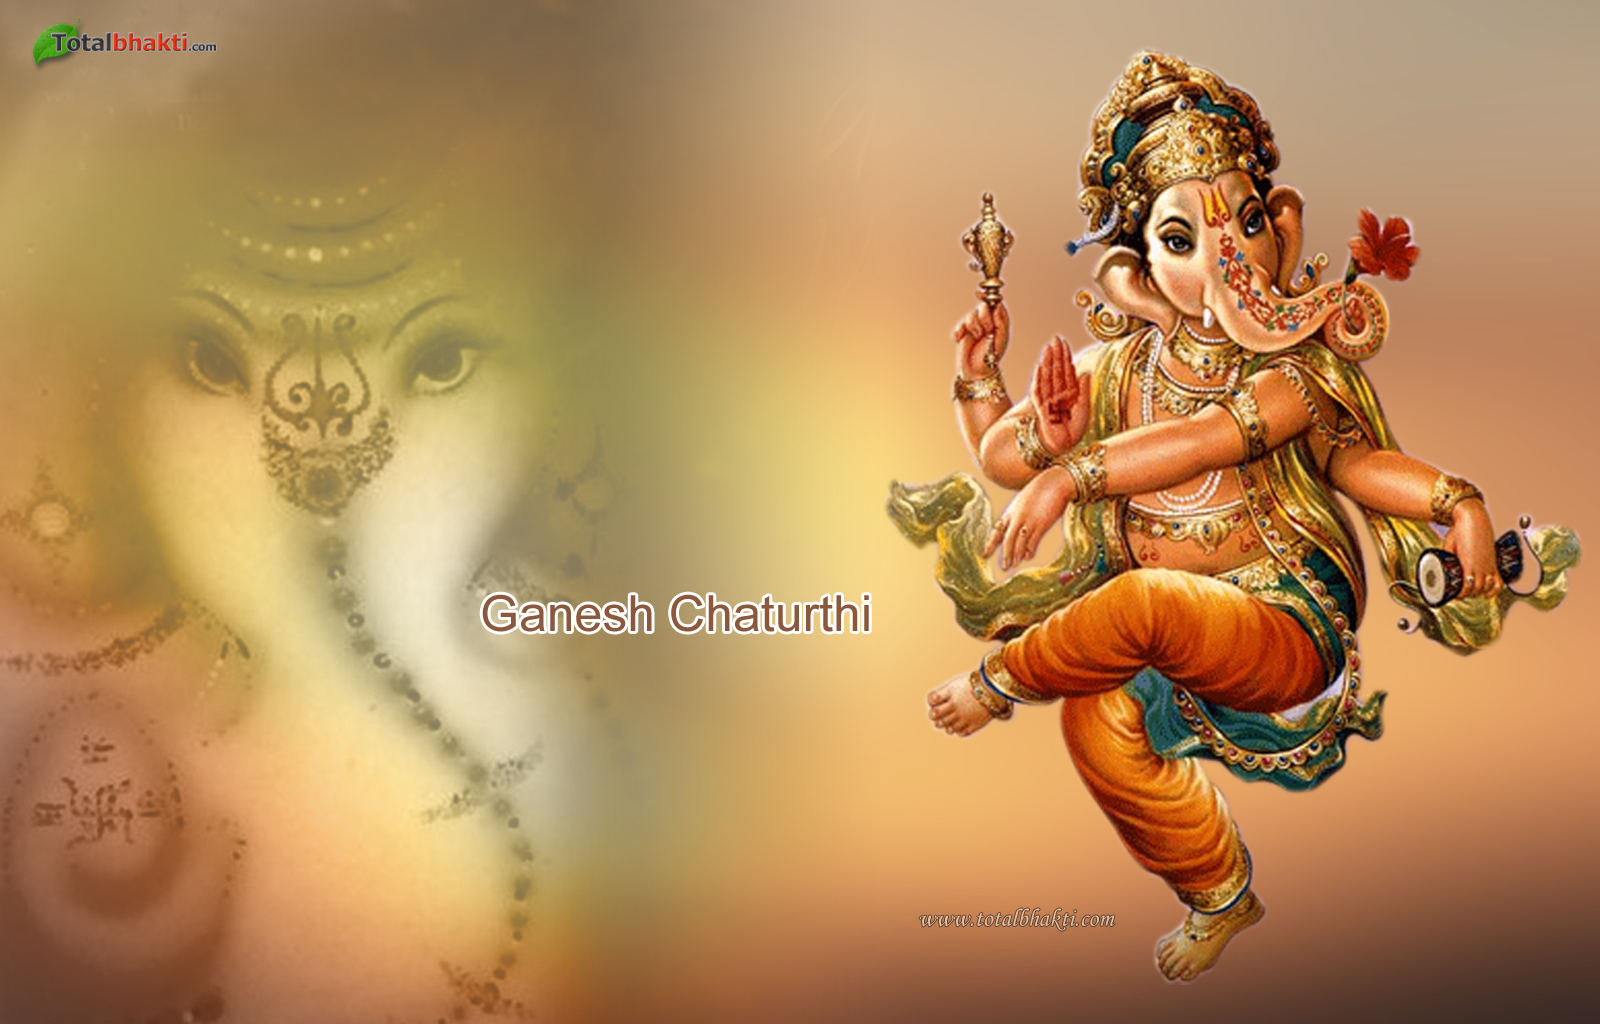 Ganesh Chaturthi Wishes Wallpaper Ganesha